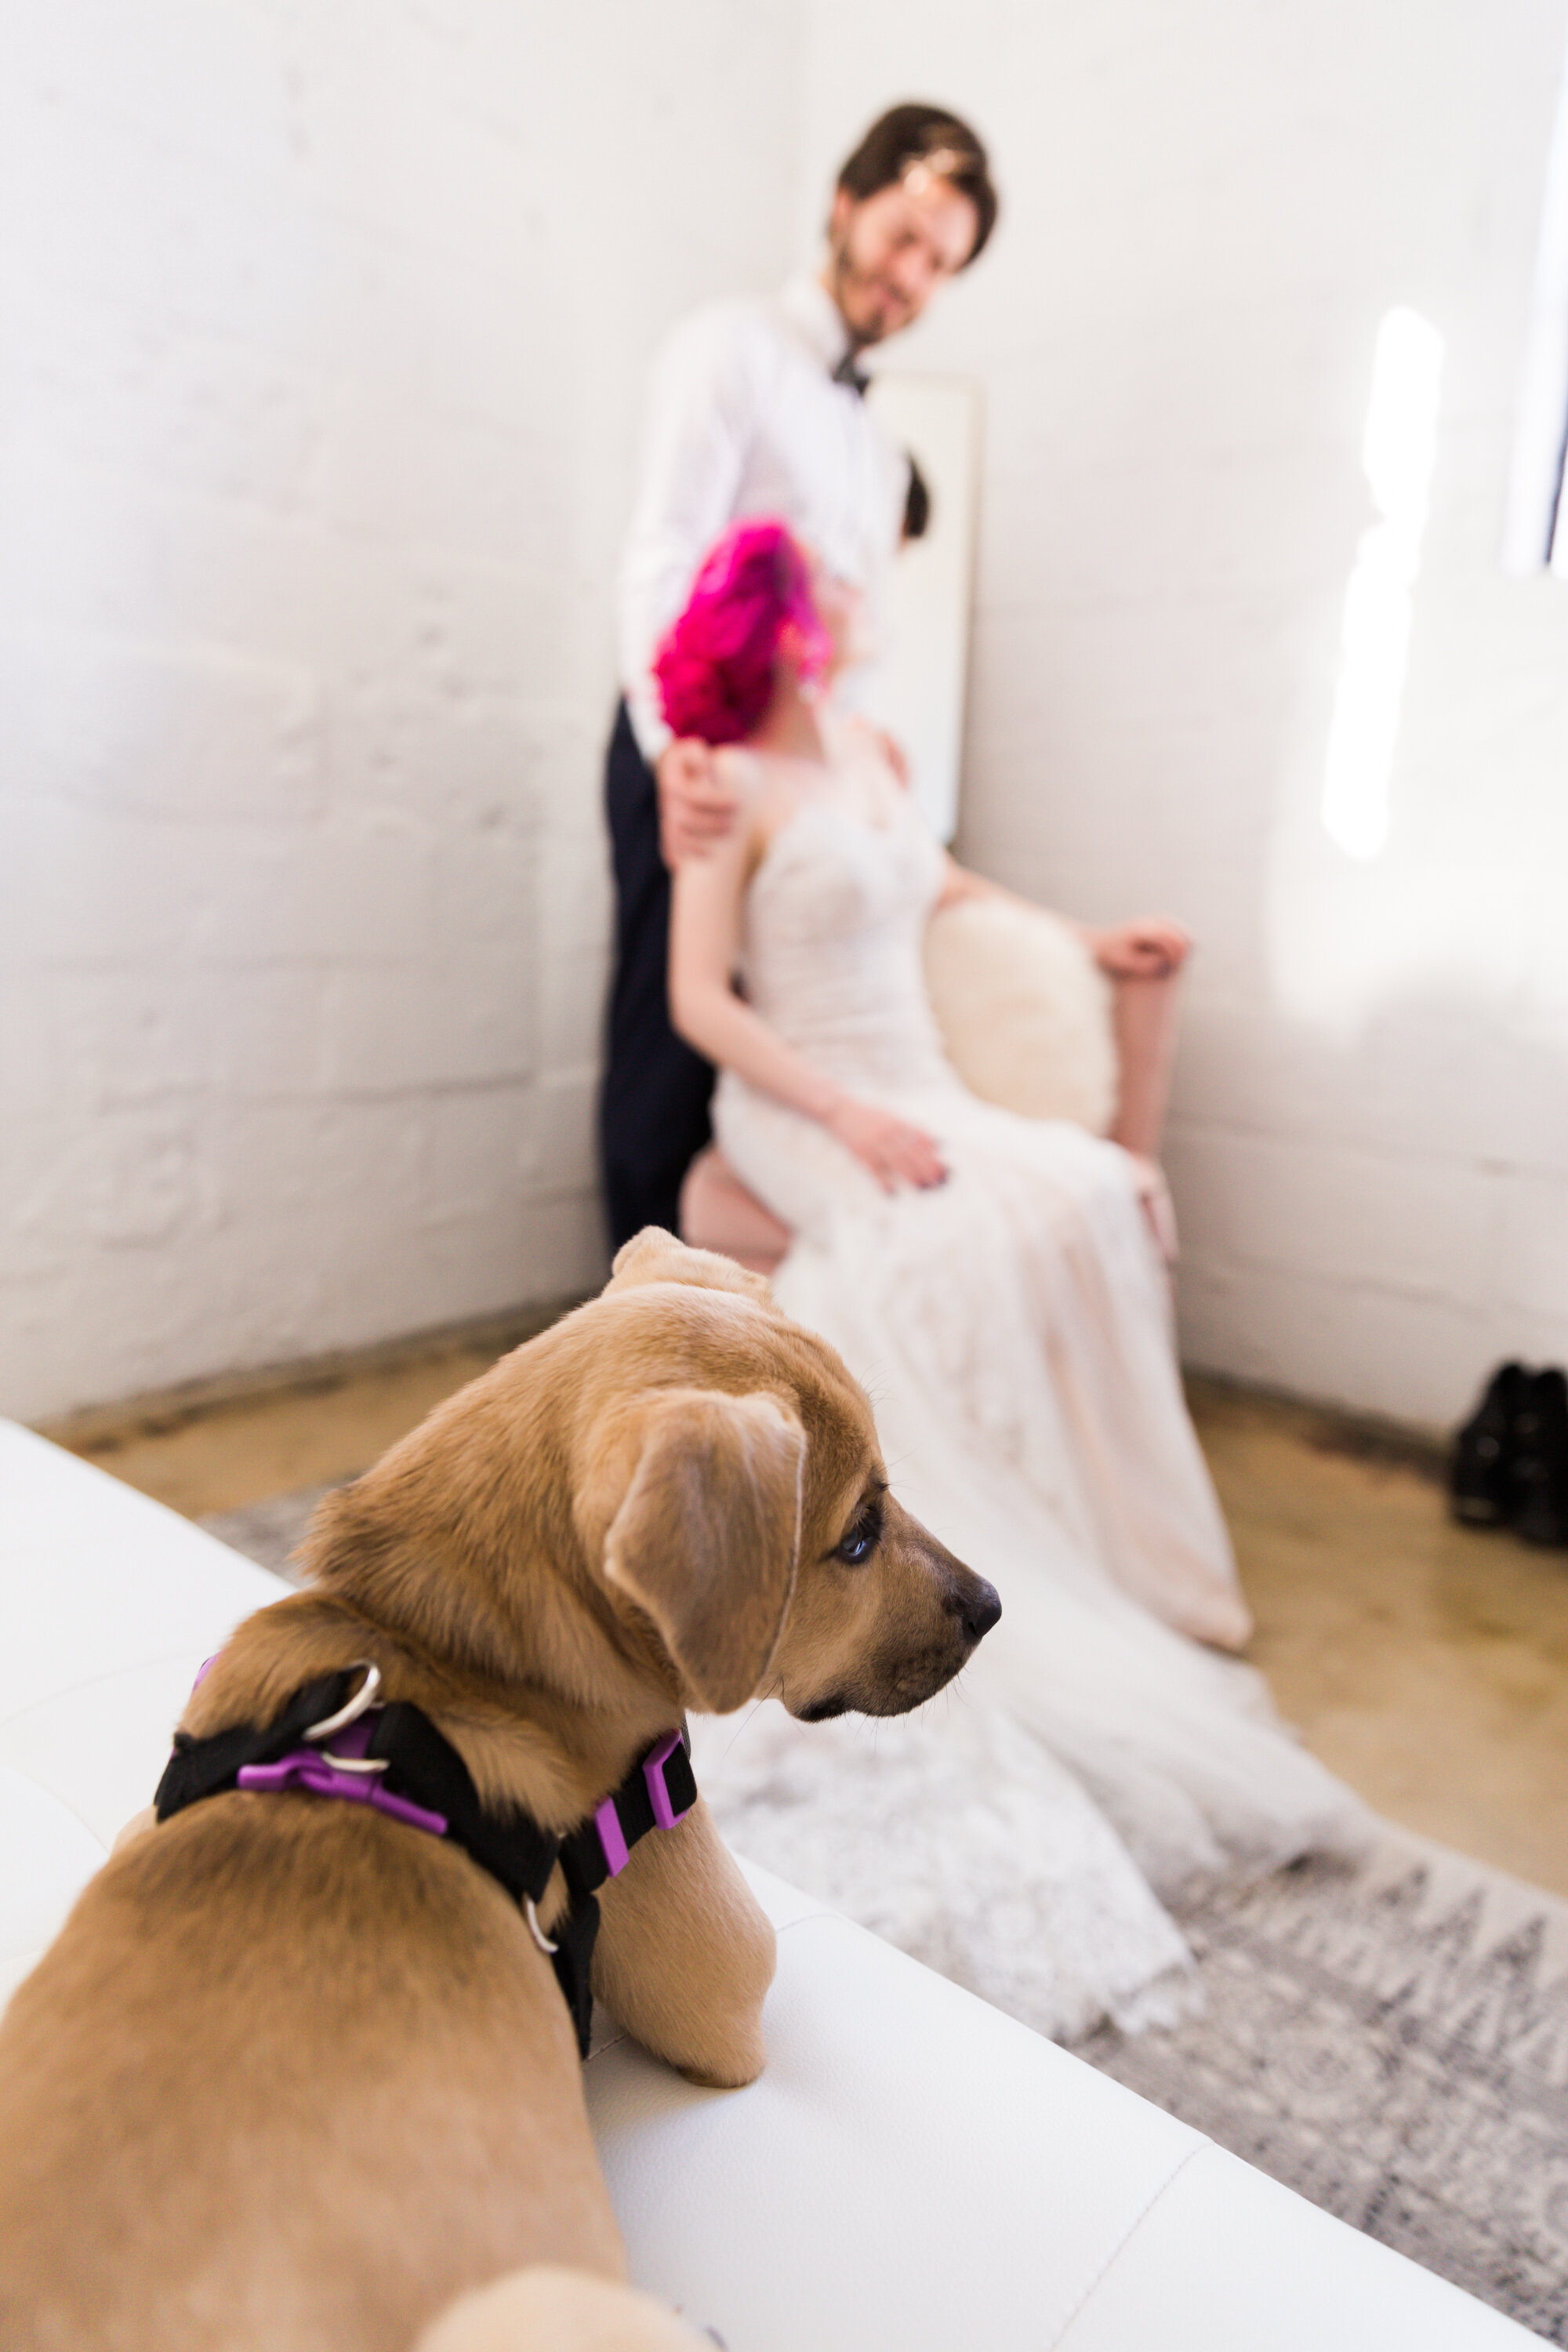 haven street ballroom wedding with puppies best baltimore photographers megapixels media photography-59.jpg